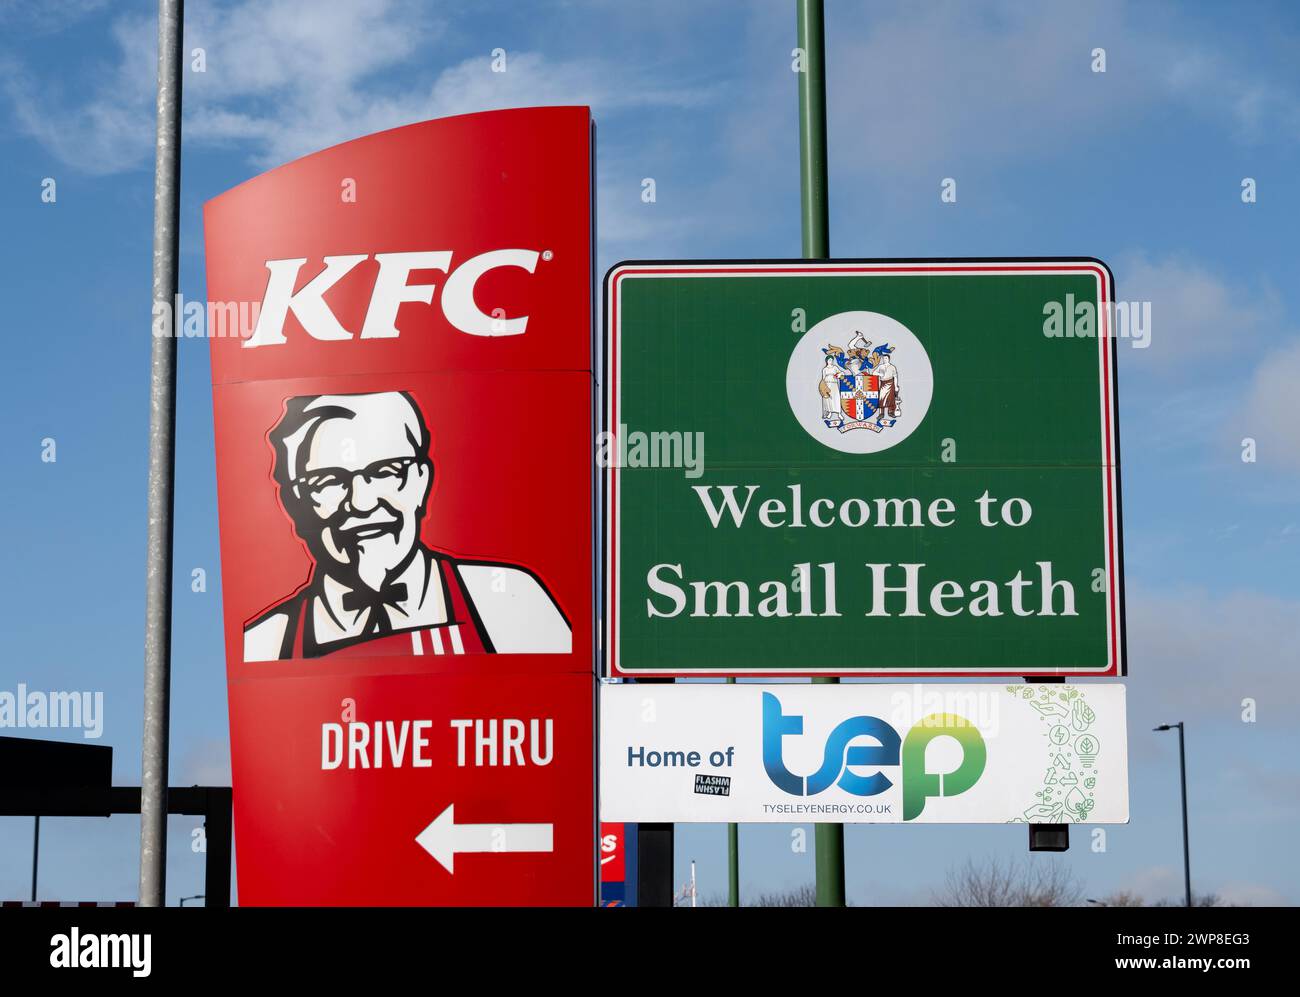 Welcome to SAmall Heath and KFC Drive Thru signs, Birmingham, West Midlands, UK Stock Photo